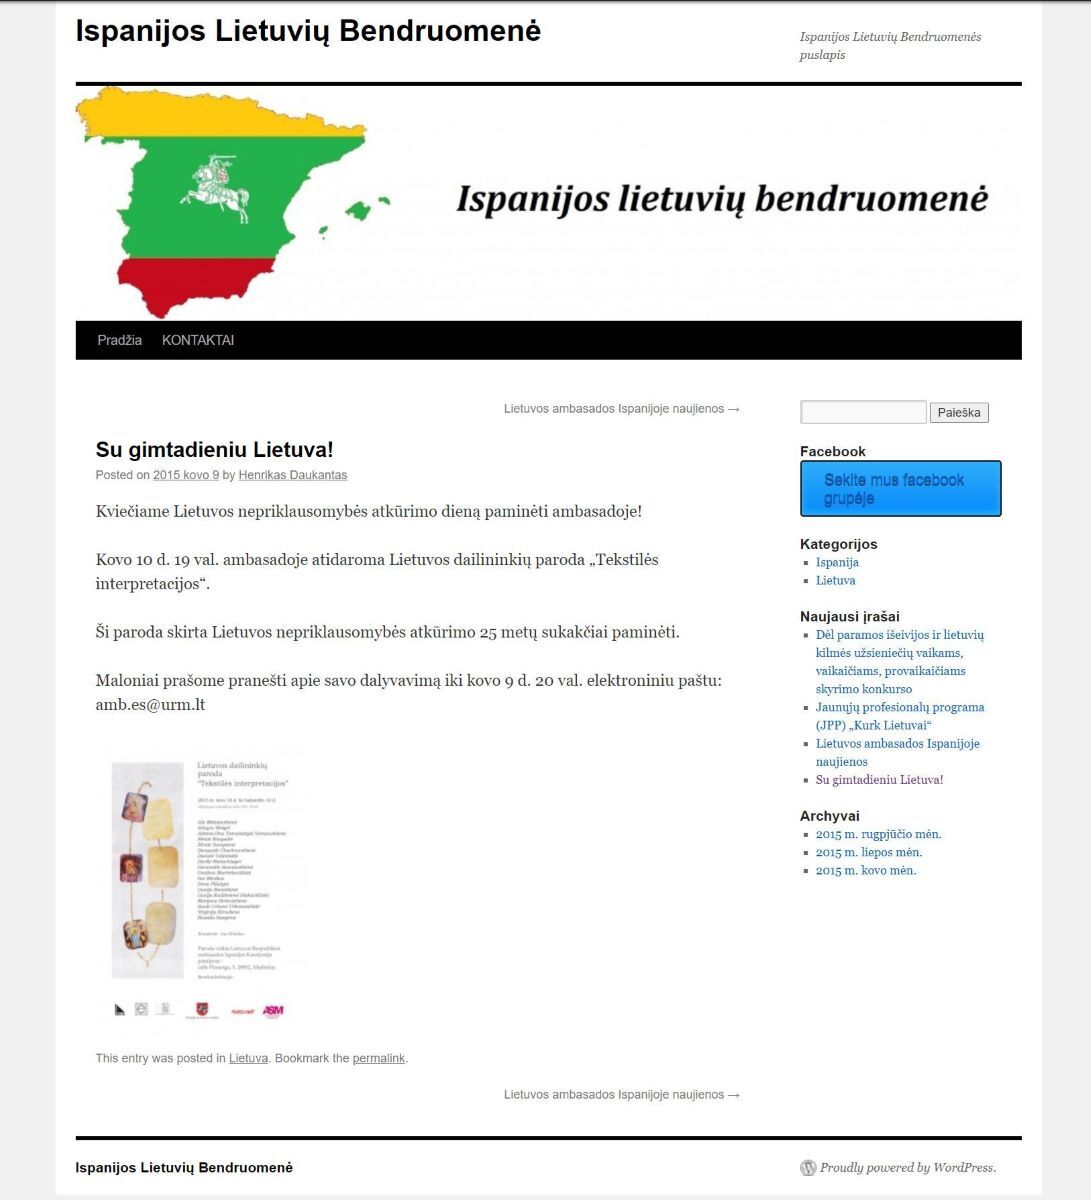 The website ispanijos.lietuviai.com created and managed by Henrikas Daukantas<br />
Internet Newspaper for Youth "Times for Children"<br />
